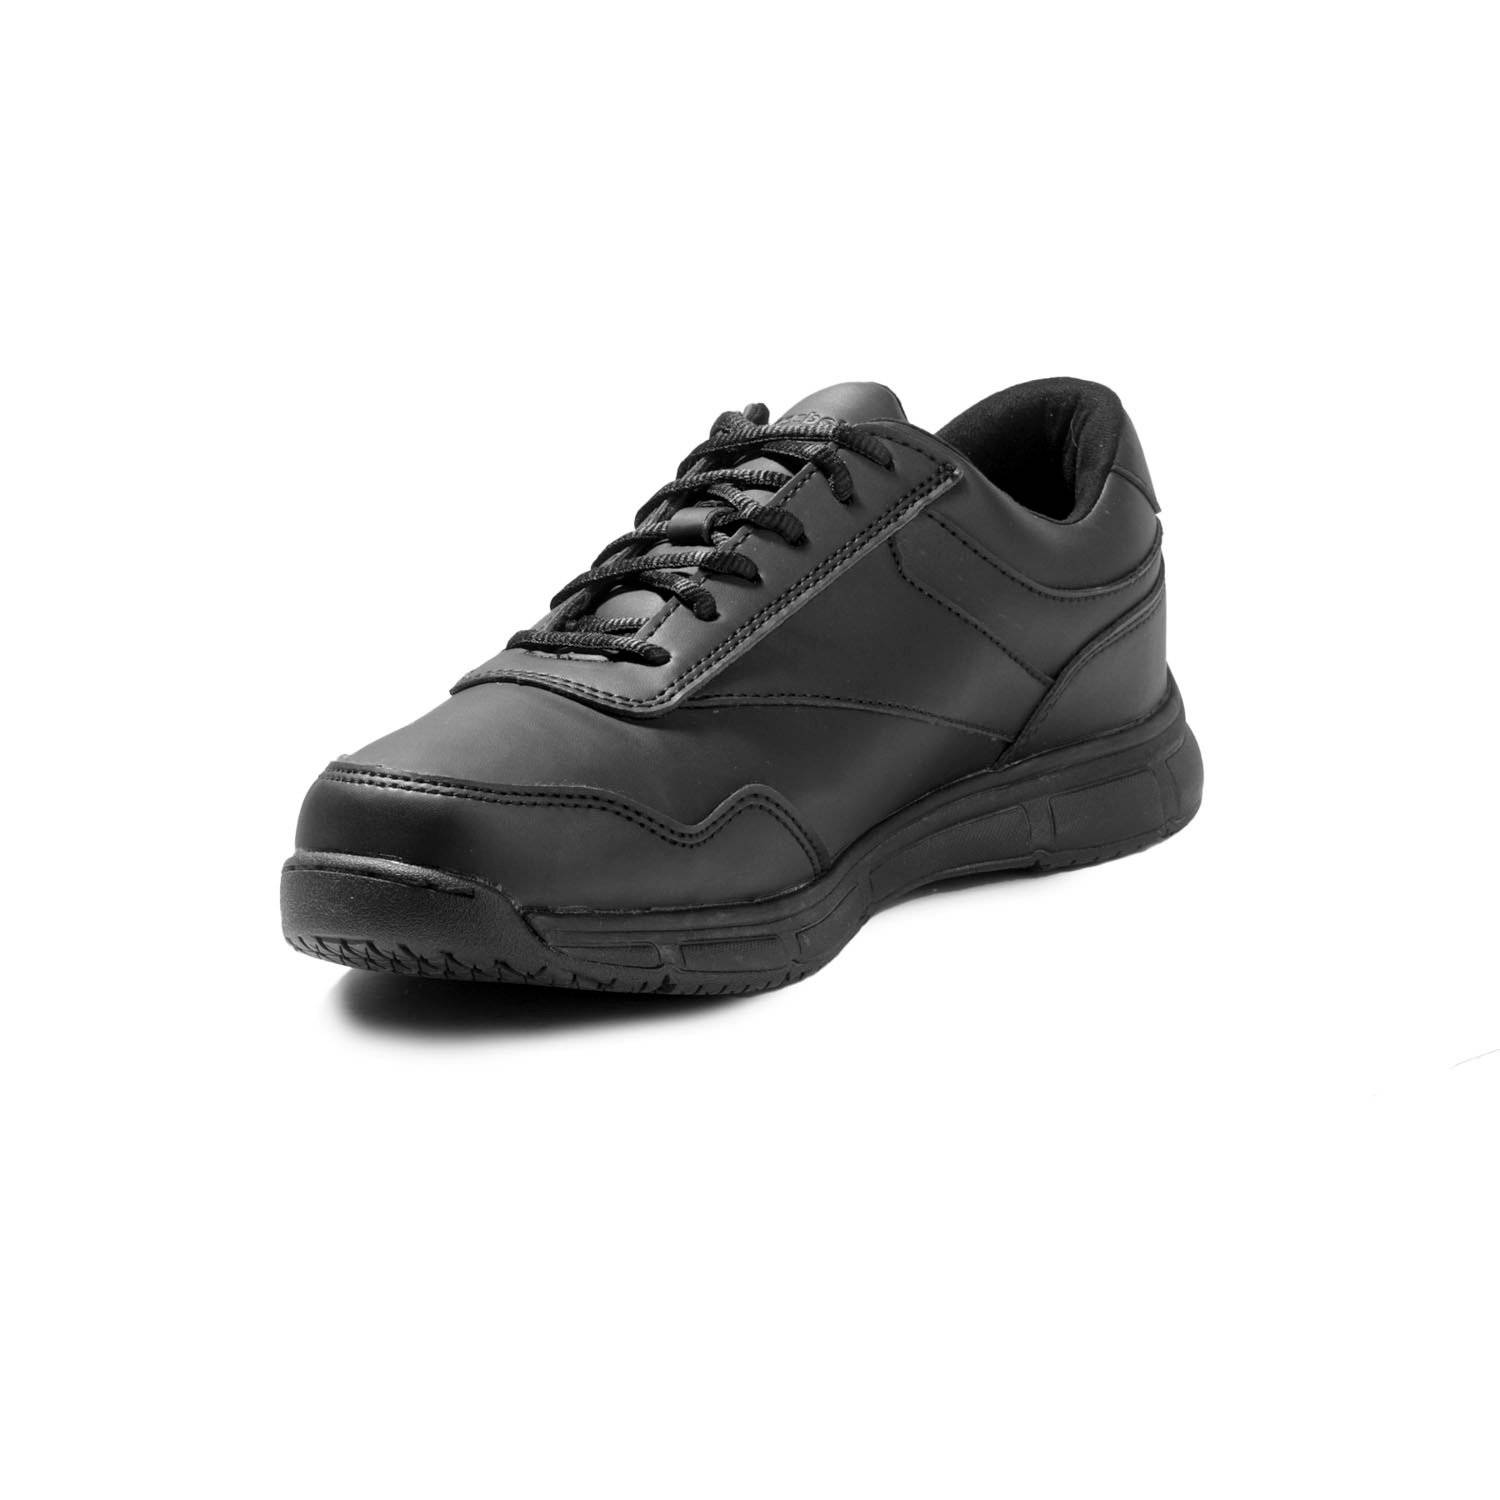 Reebok Men's Jorie LT Athletic Slip Resistant Work Shoes